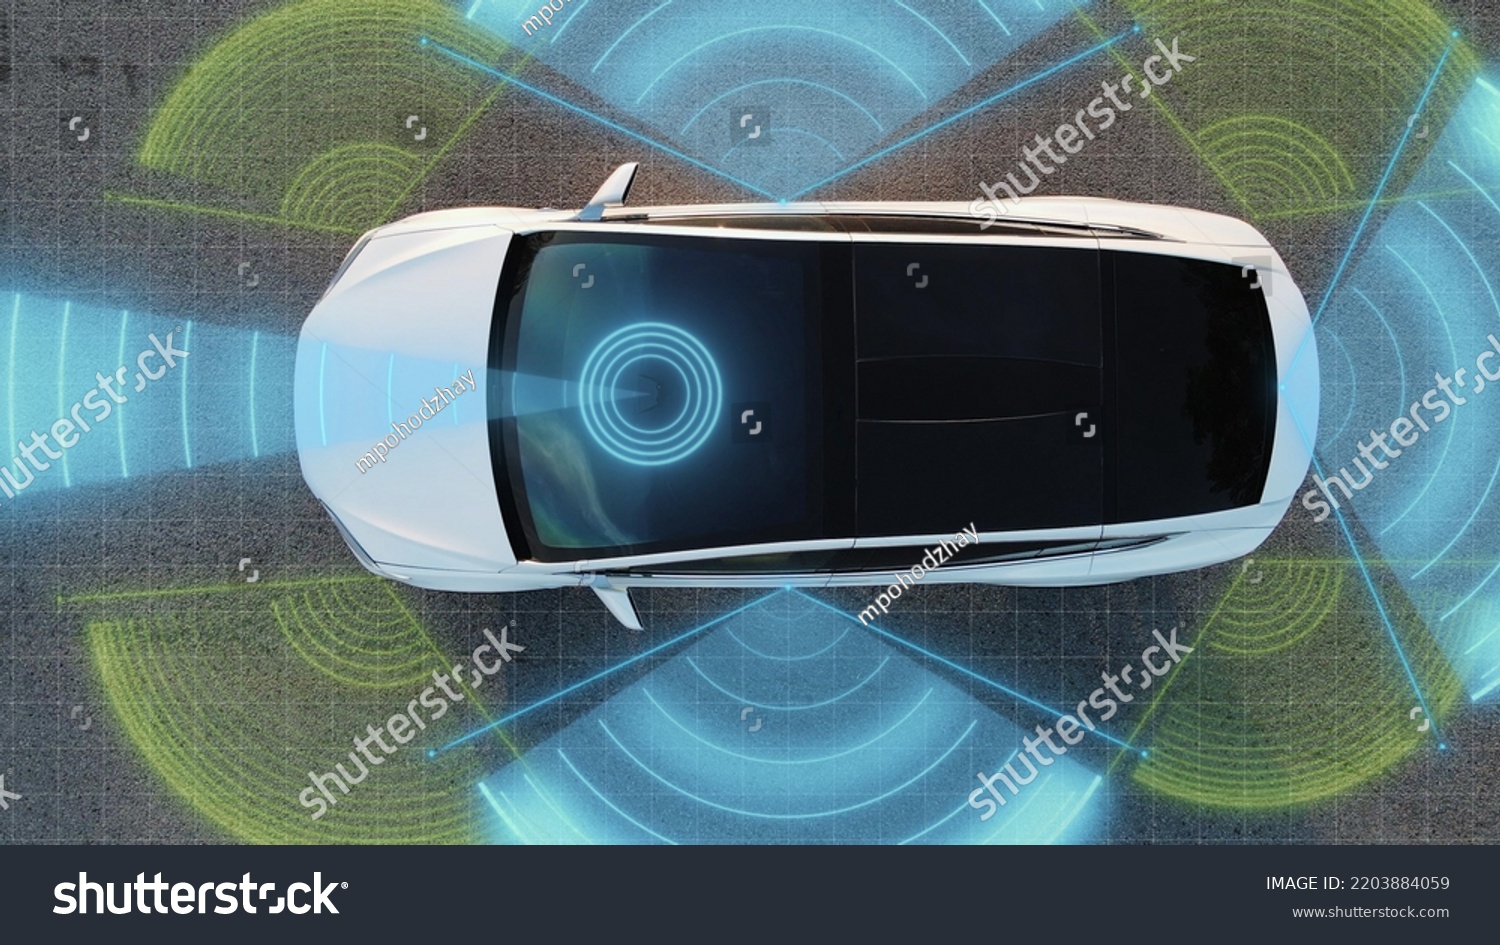 Self Driving Autopilot Car Technologies, Radar, 360, Sensor, Cameras, Laser. Artificial Intelligence Digitalizes and Analyzes Road. Sensor Scanning Road Ahead for Vehicles, Danger, Speed Limits. #2203884059